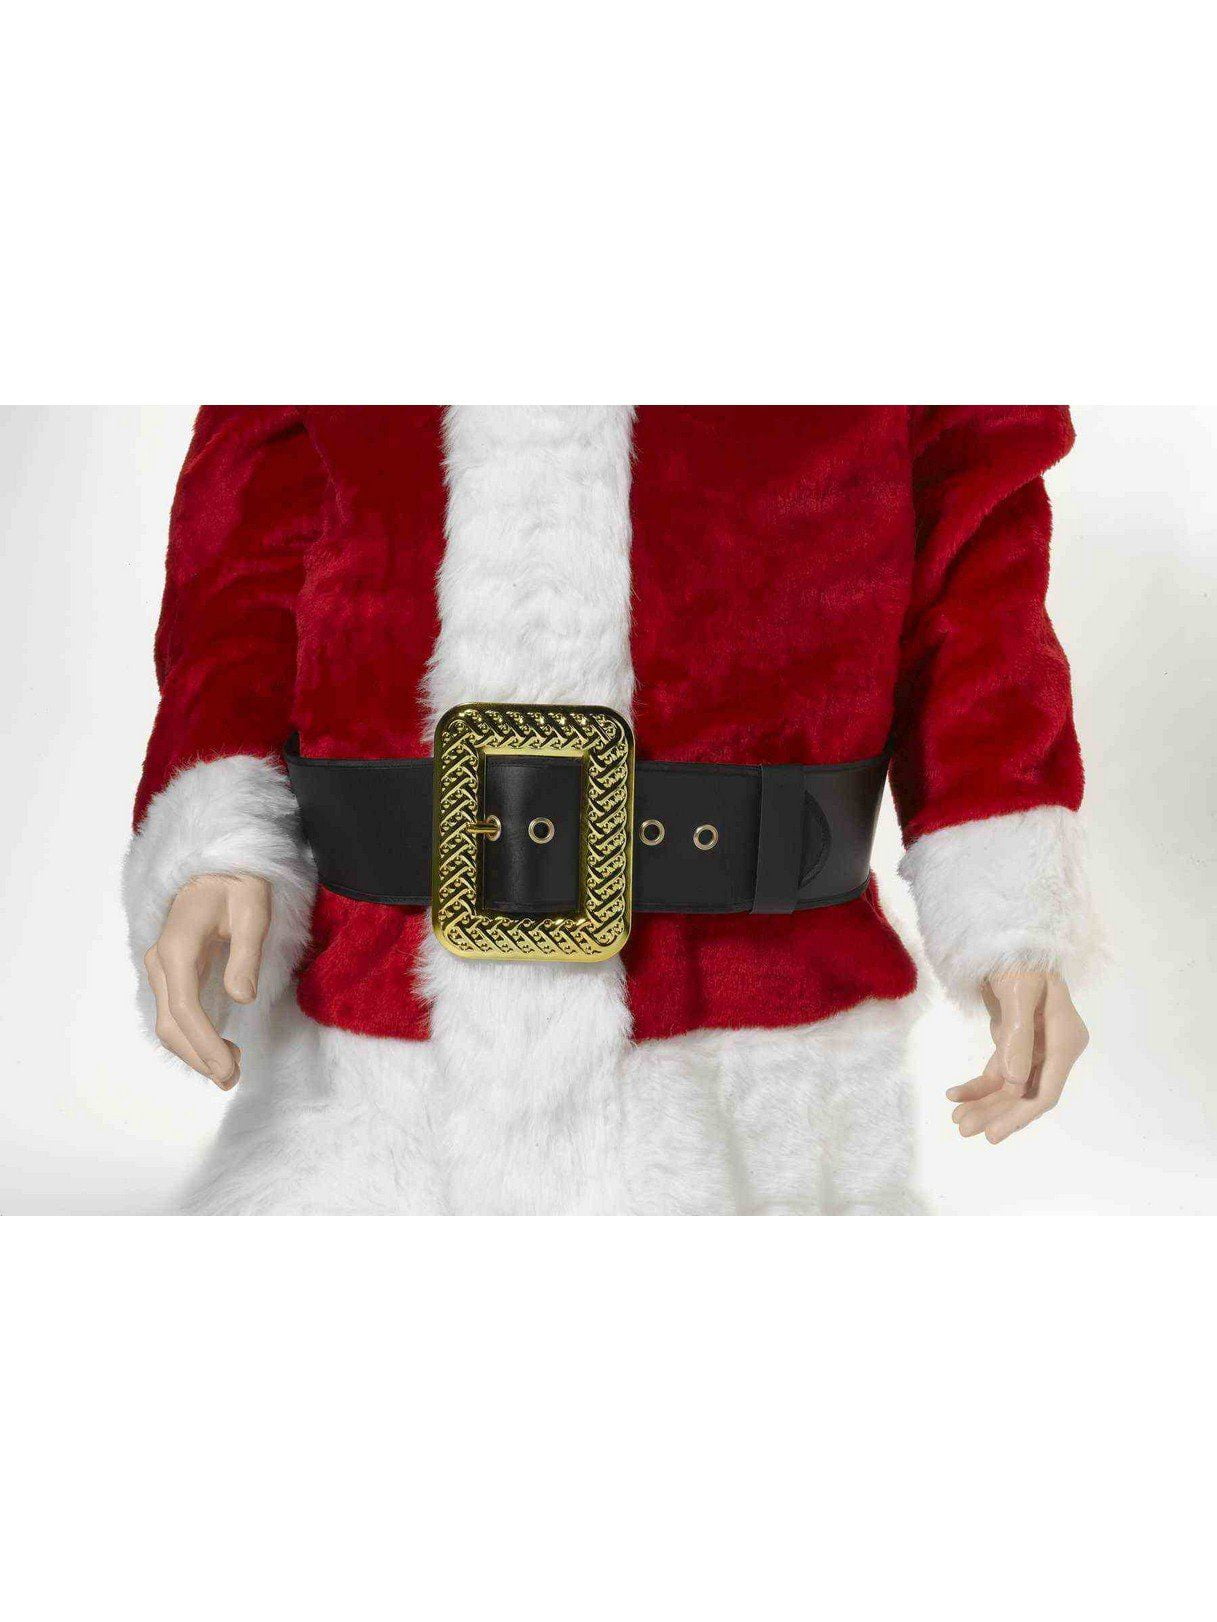 Black Jumbo Novelty Xmas Santa Claus Pirate Costume Buckle Belt Accessory 